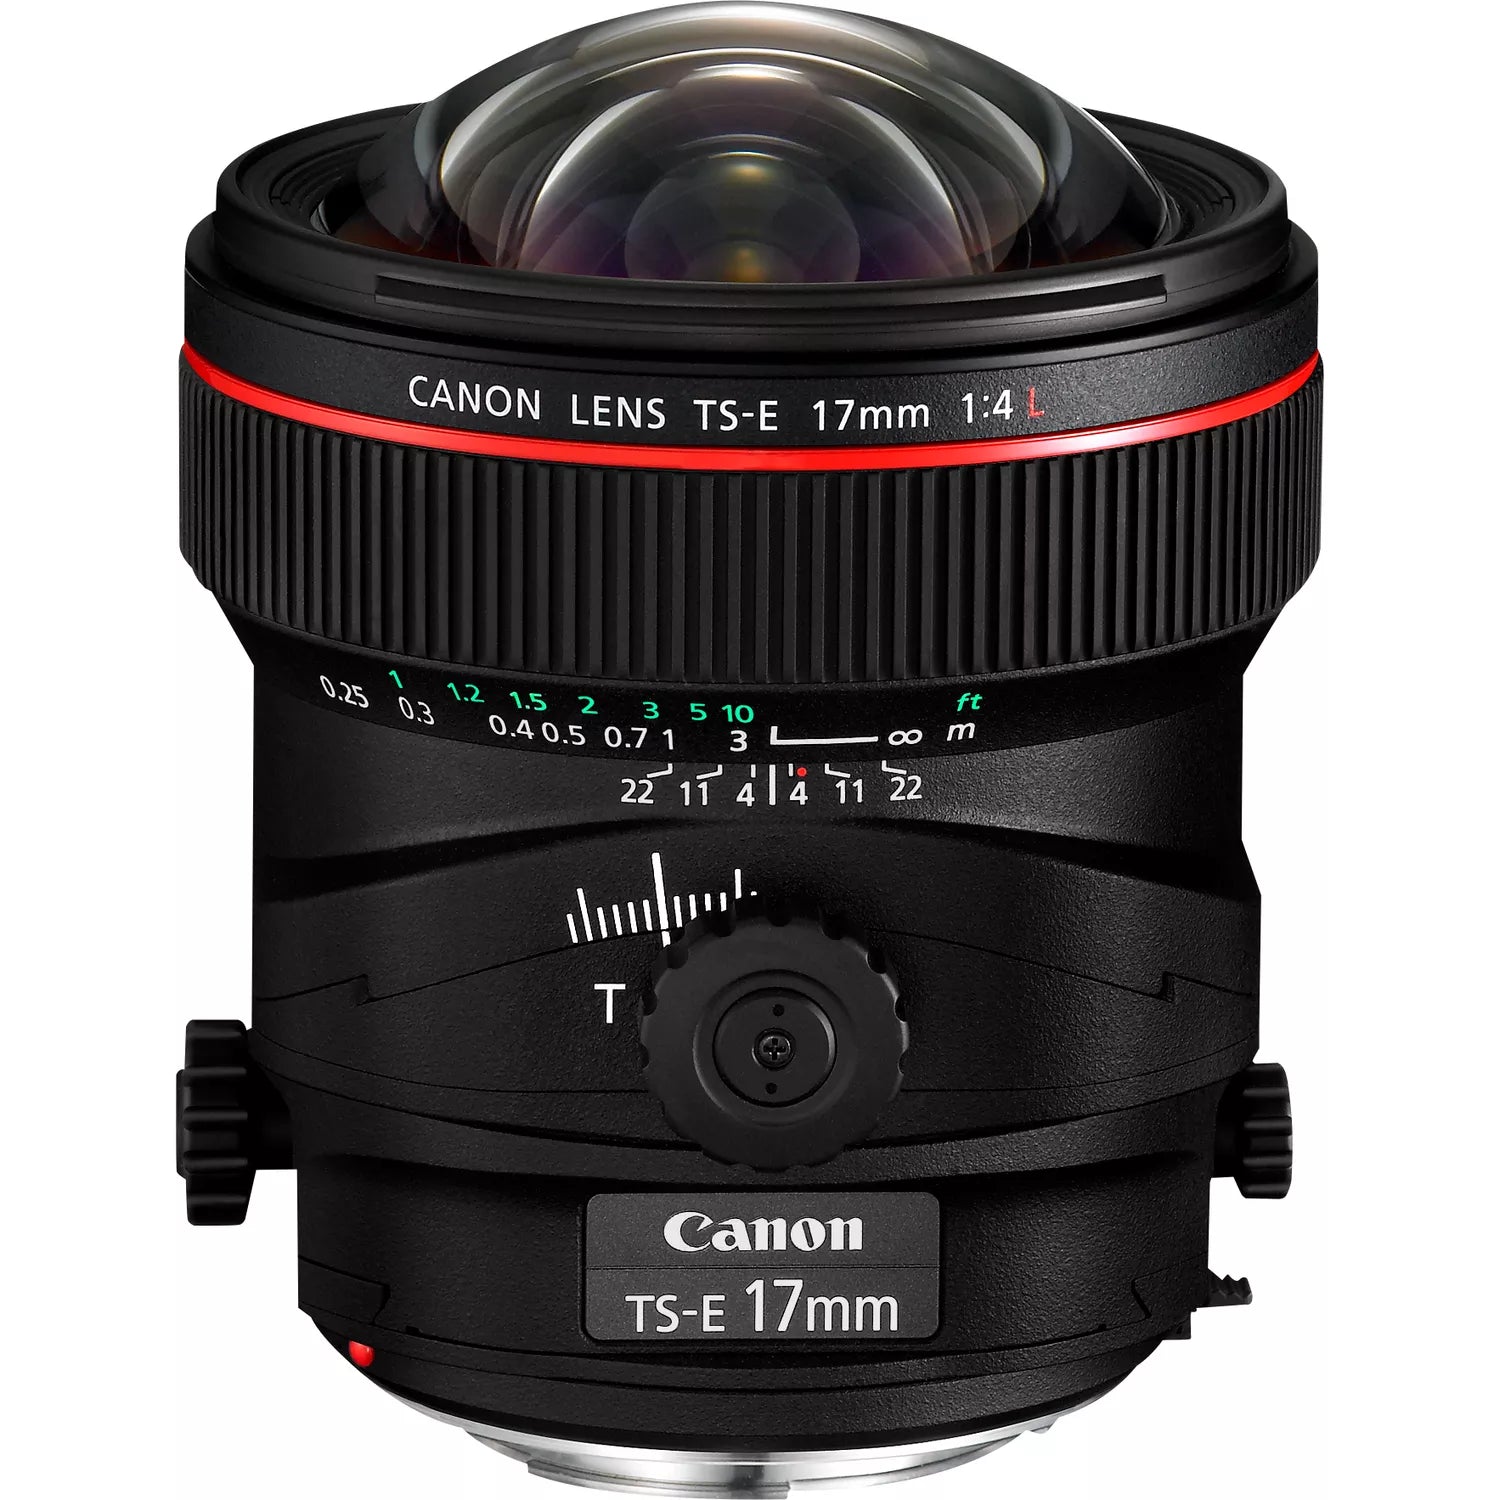 Product Image of Canon TS-E 17mm f4.0 L Tilt and Shift Lens